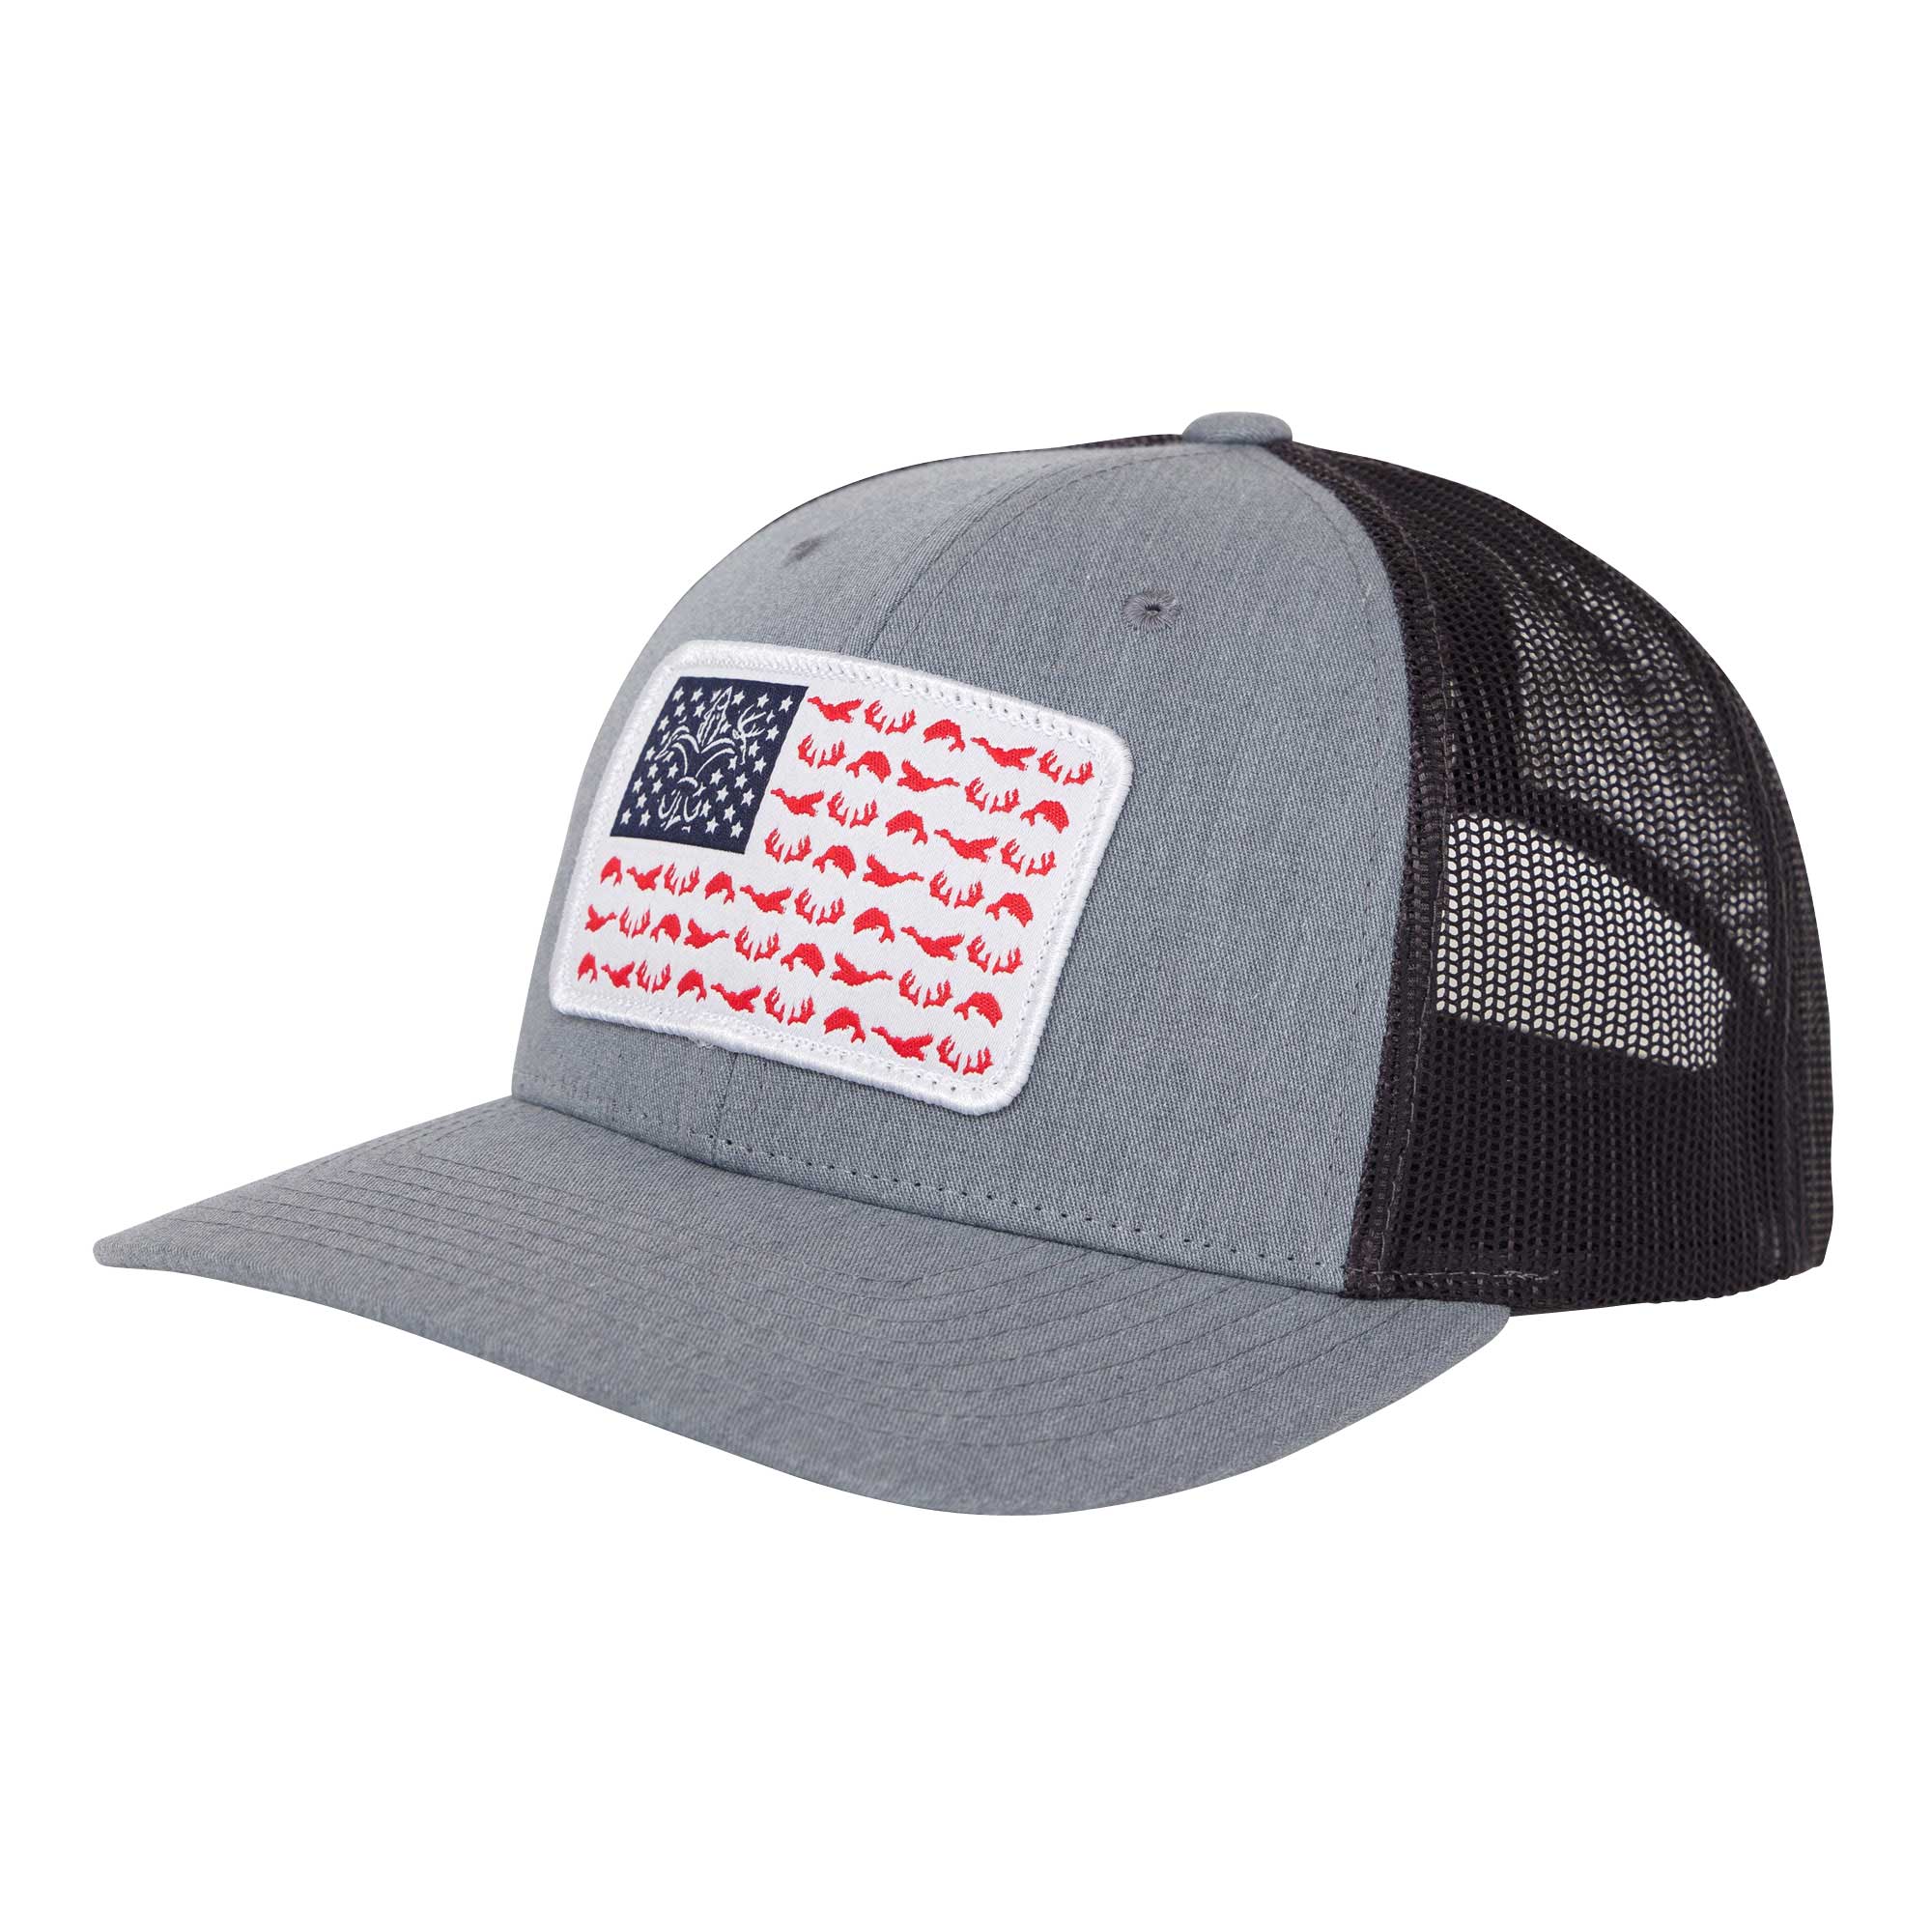 Buy American Fish Flag Trucker Hats - Fishing Gifts for Men